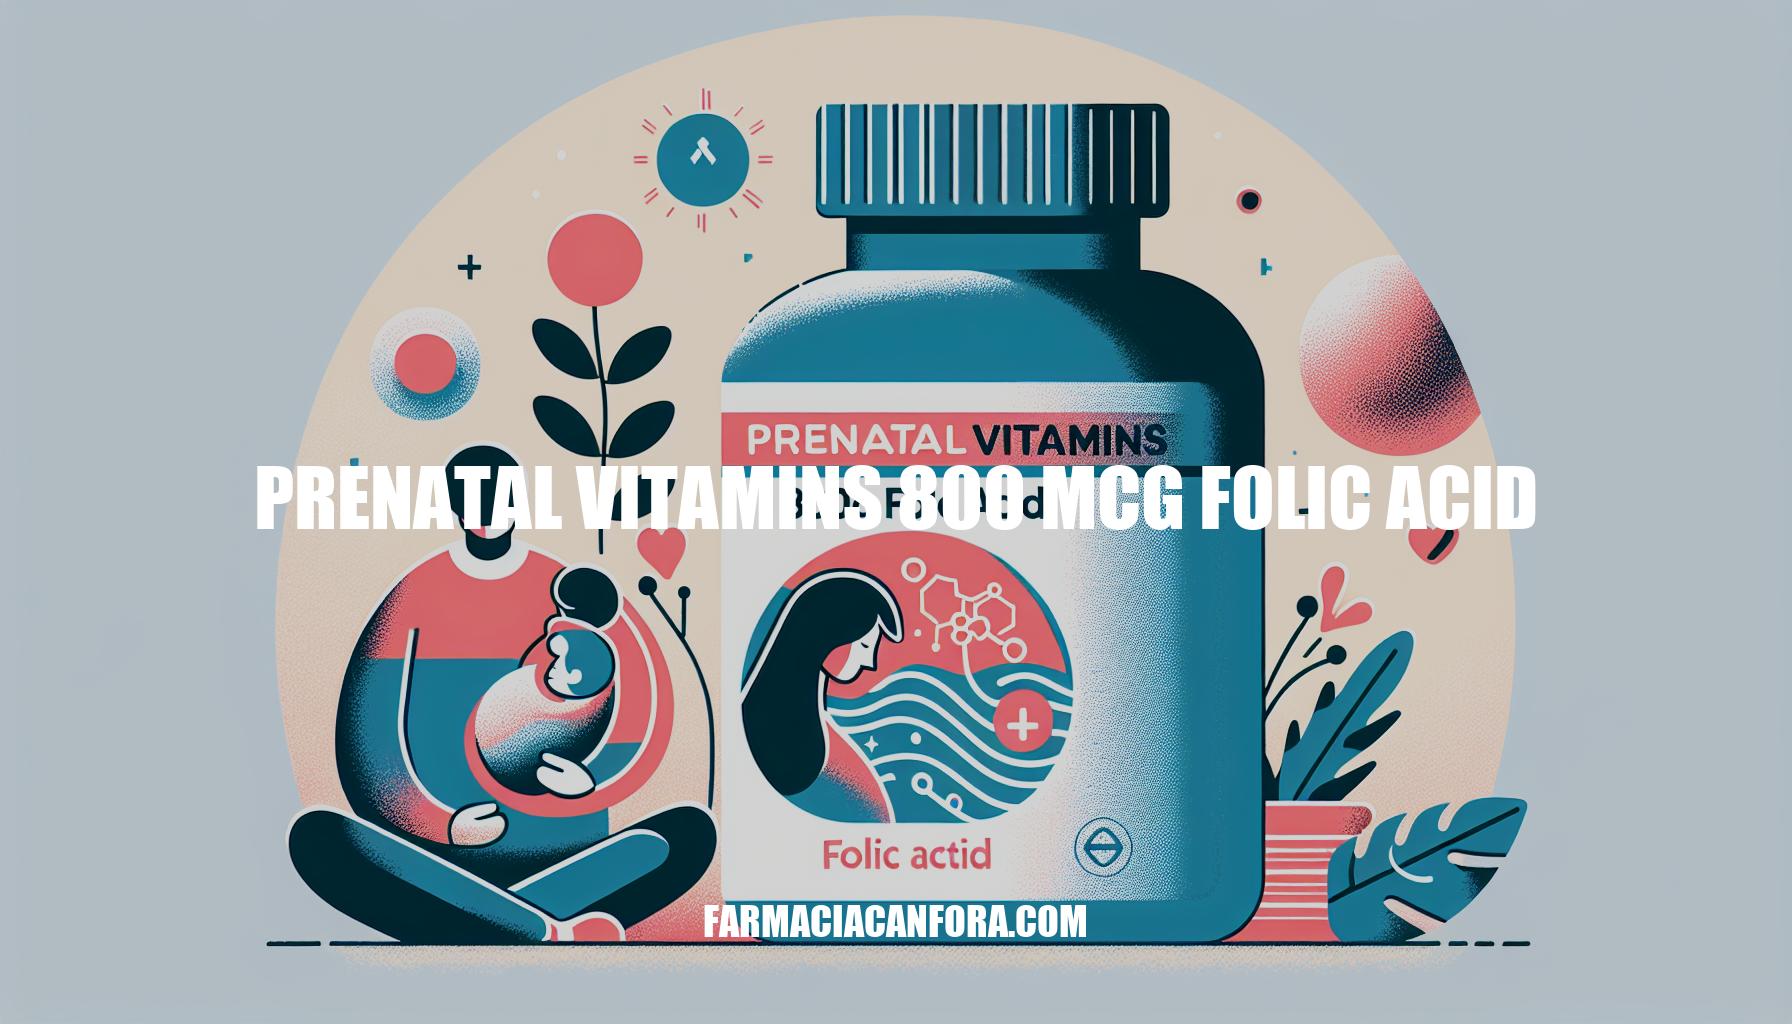 Prenatal Vitamins 800 mcg Folic Acid: Essential for Maternal & Fetal Health